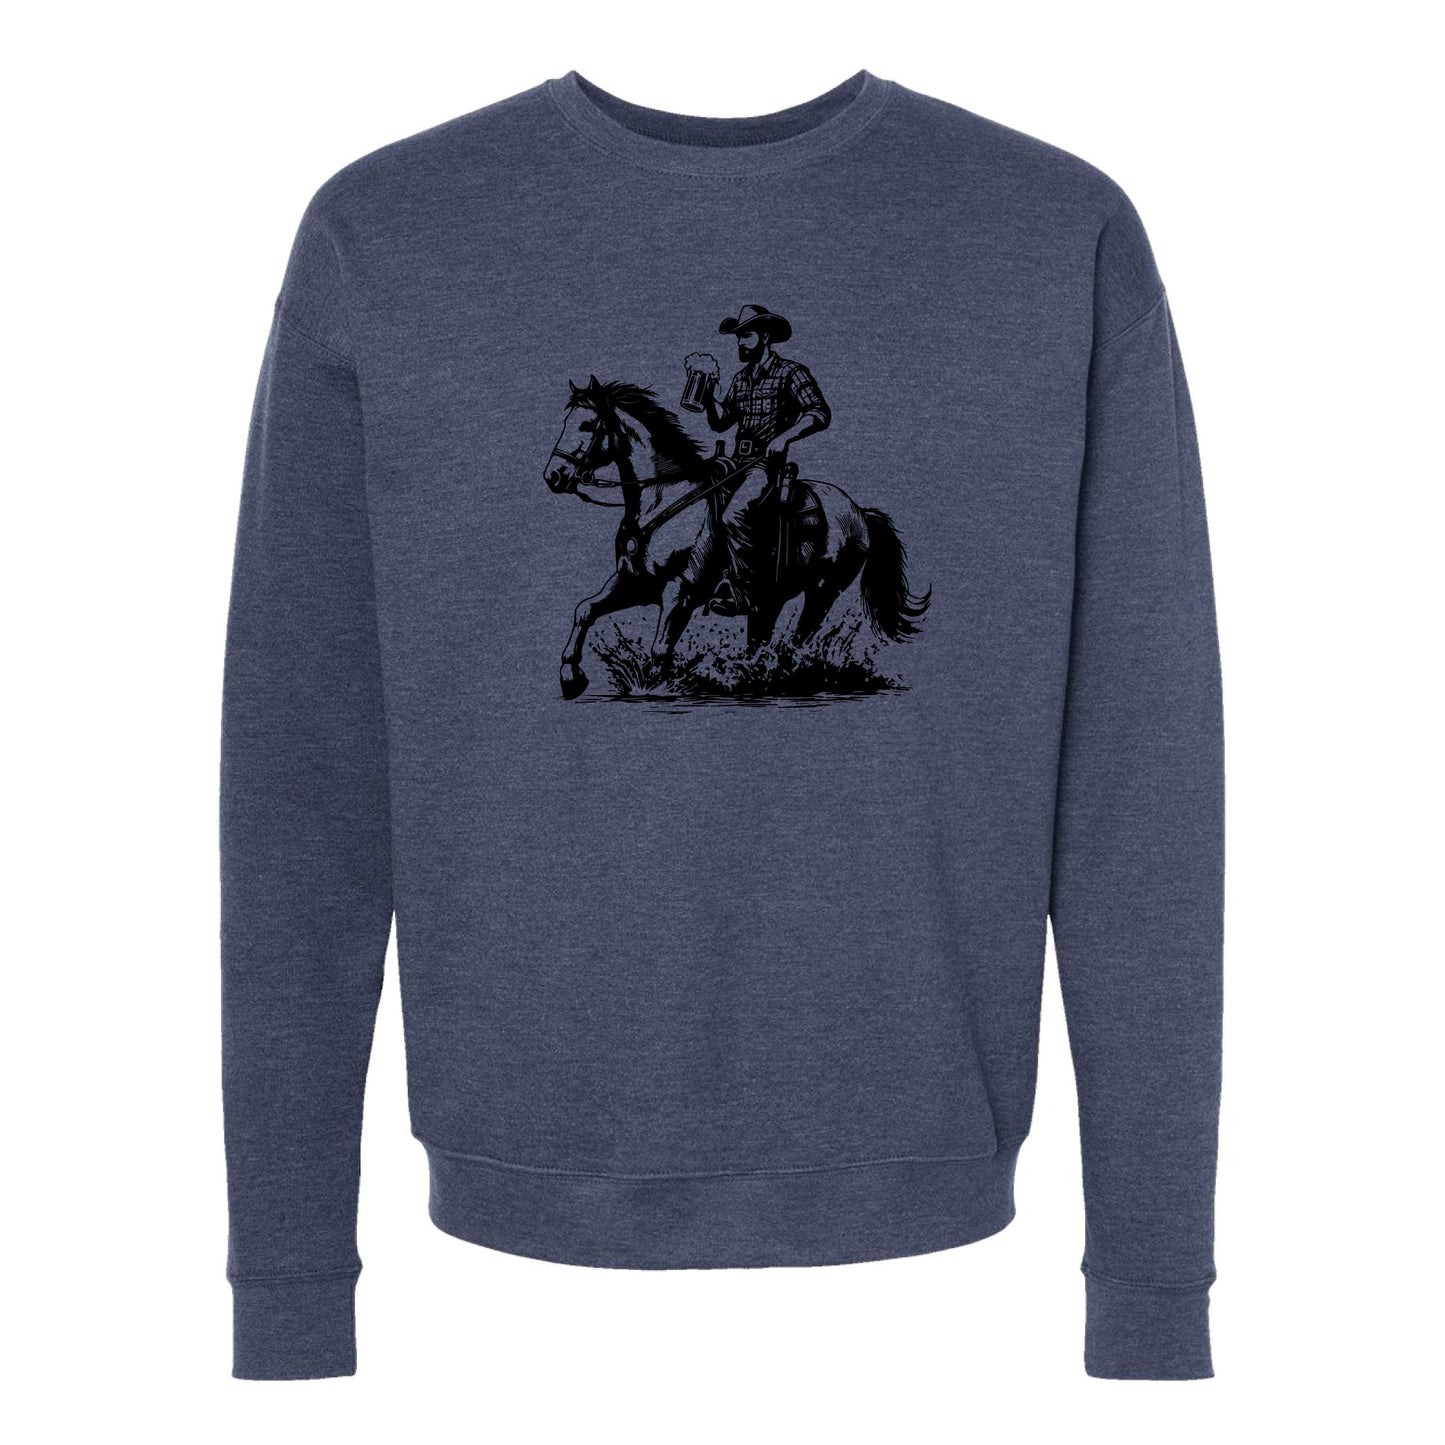 Cowboy Horse Beer Crewneck Sweatshirt